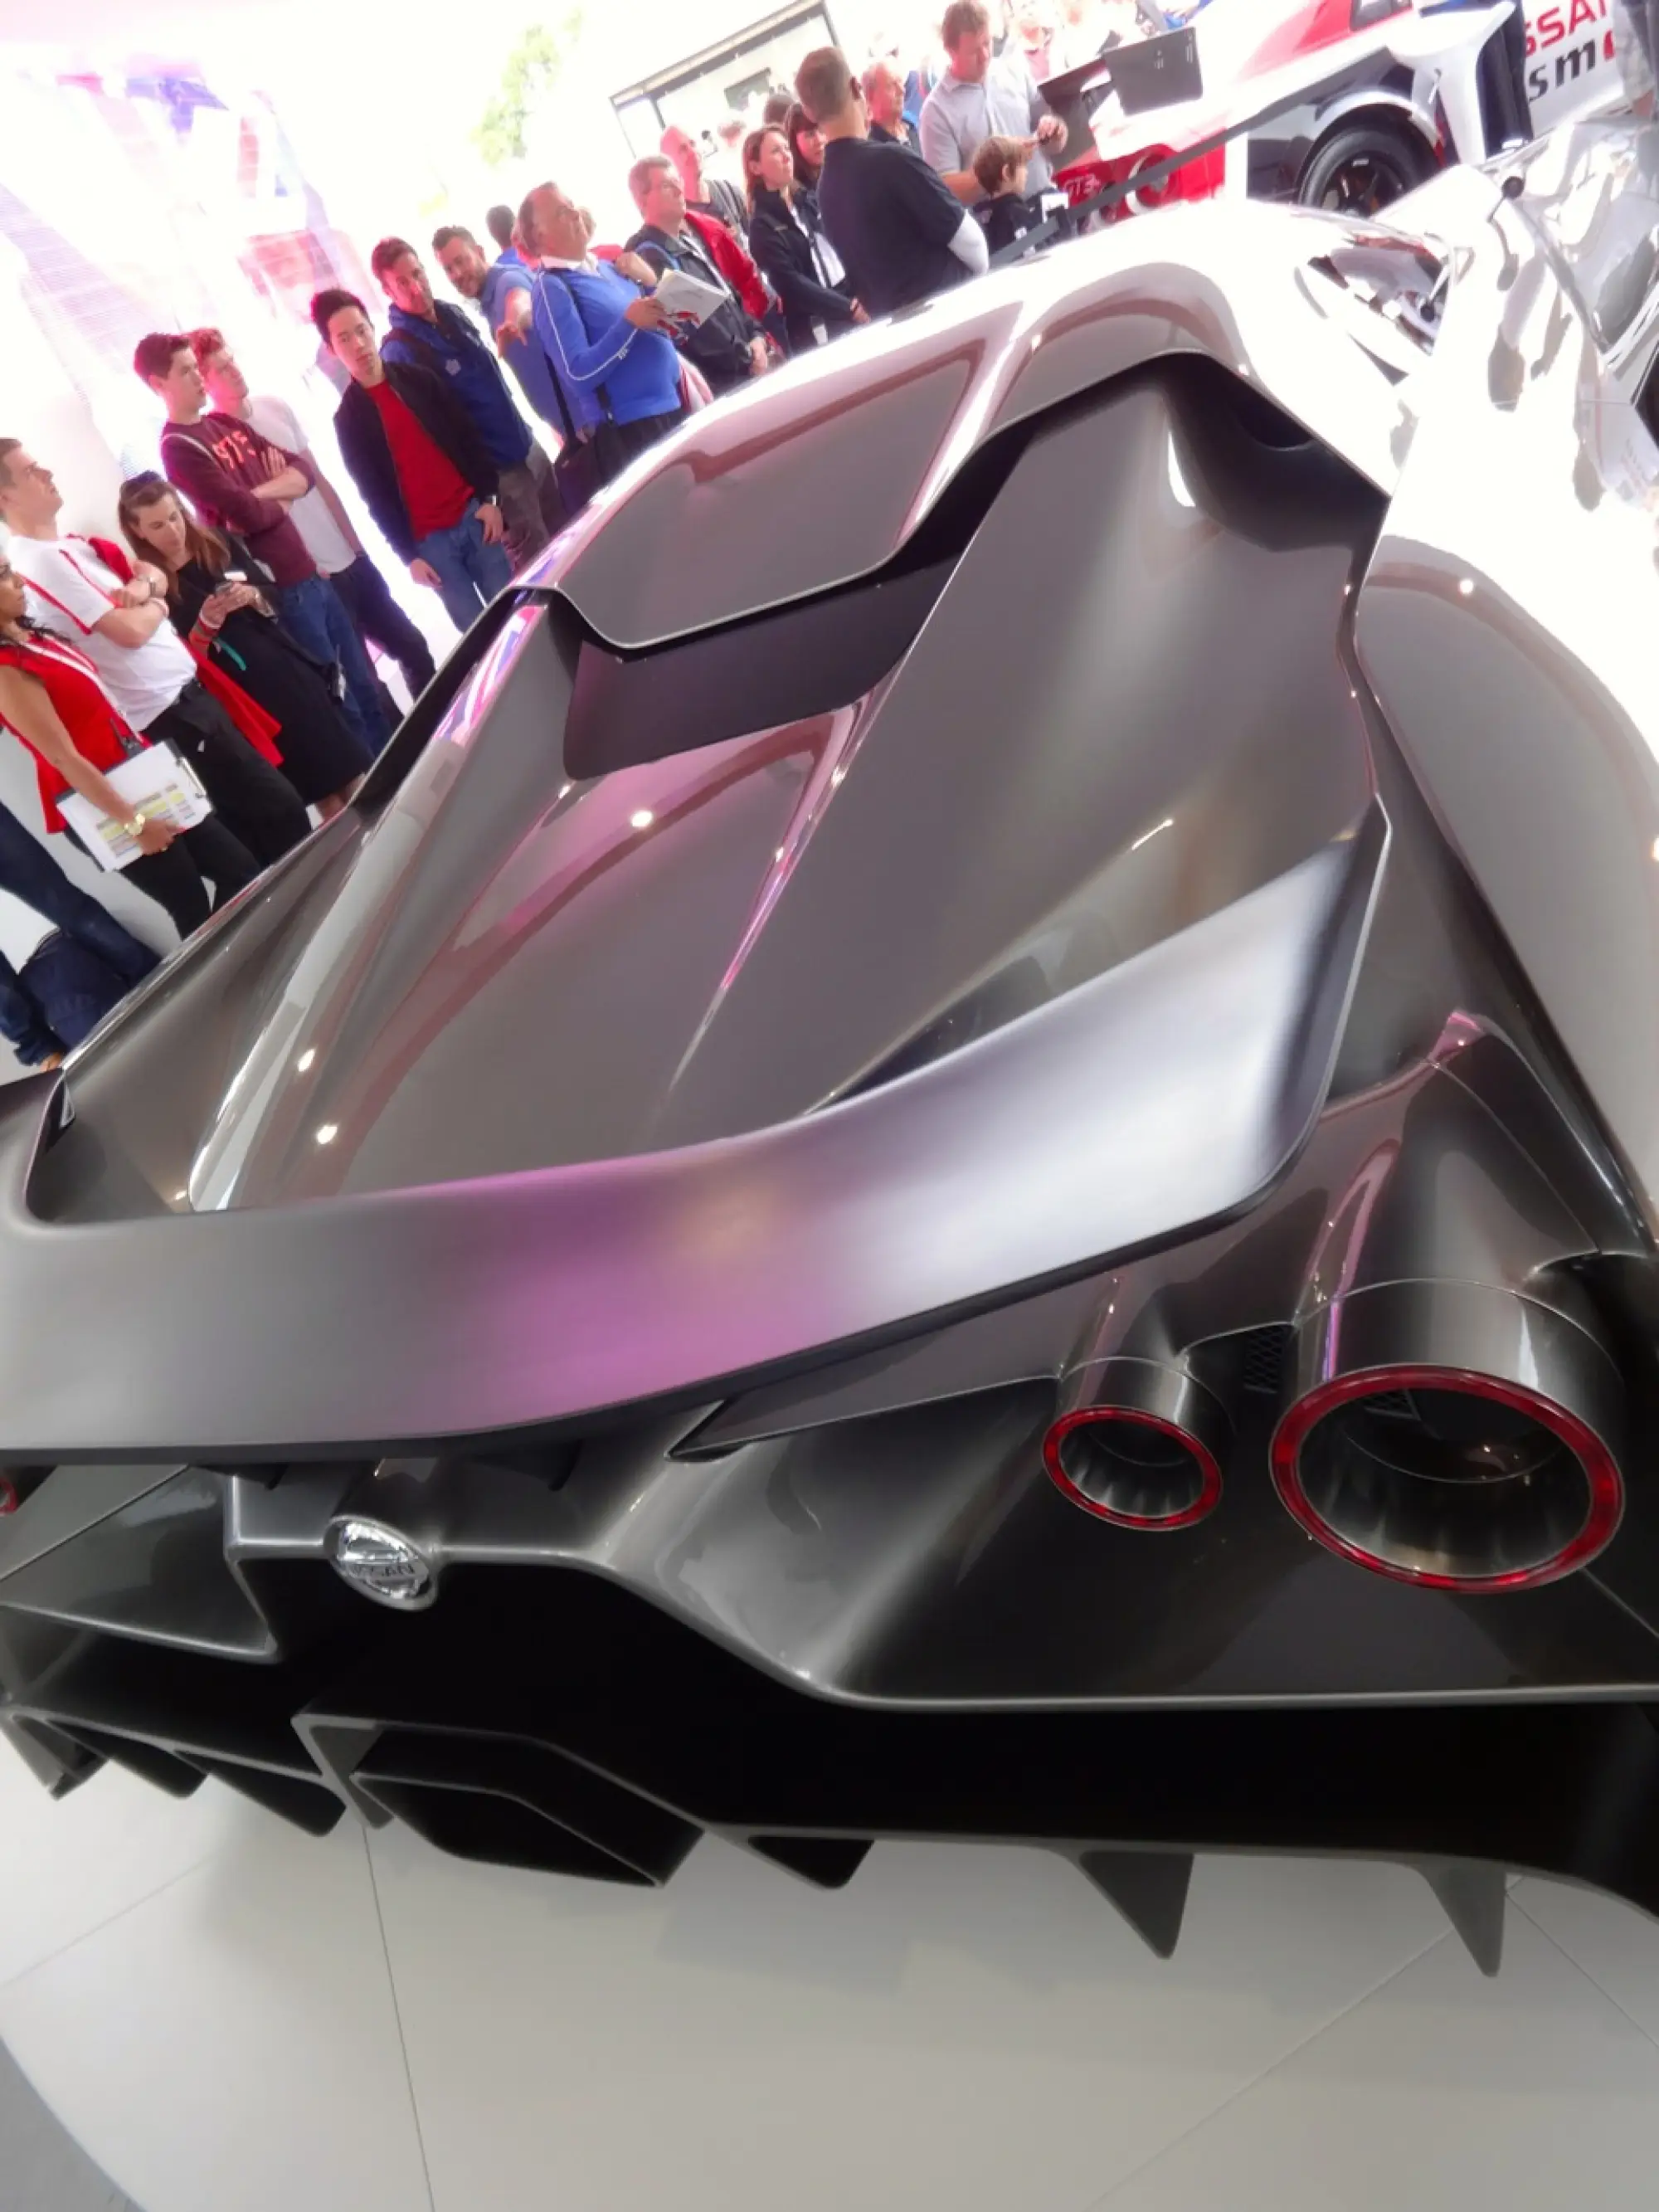 Nissan Concept 2020 Vision Gran Turismo - Goodwood 2014 - 13